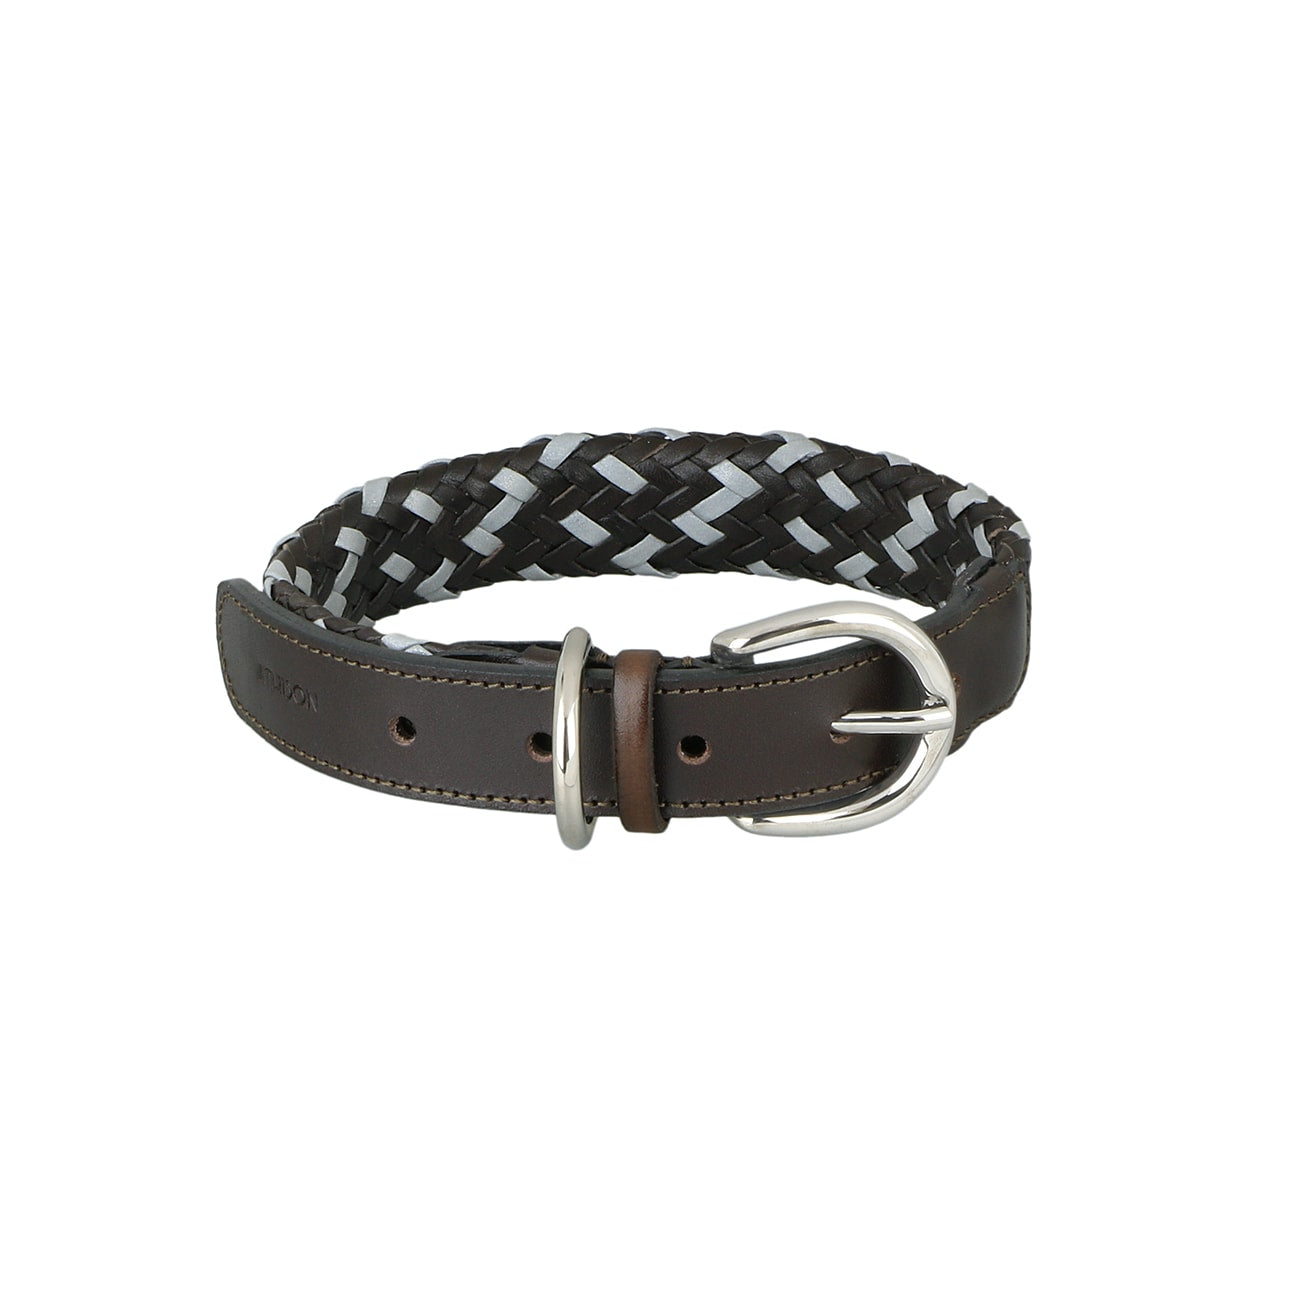 Leather and Reflector Dog Collar - Medium